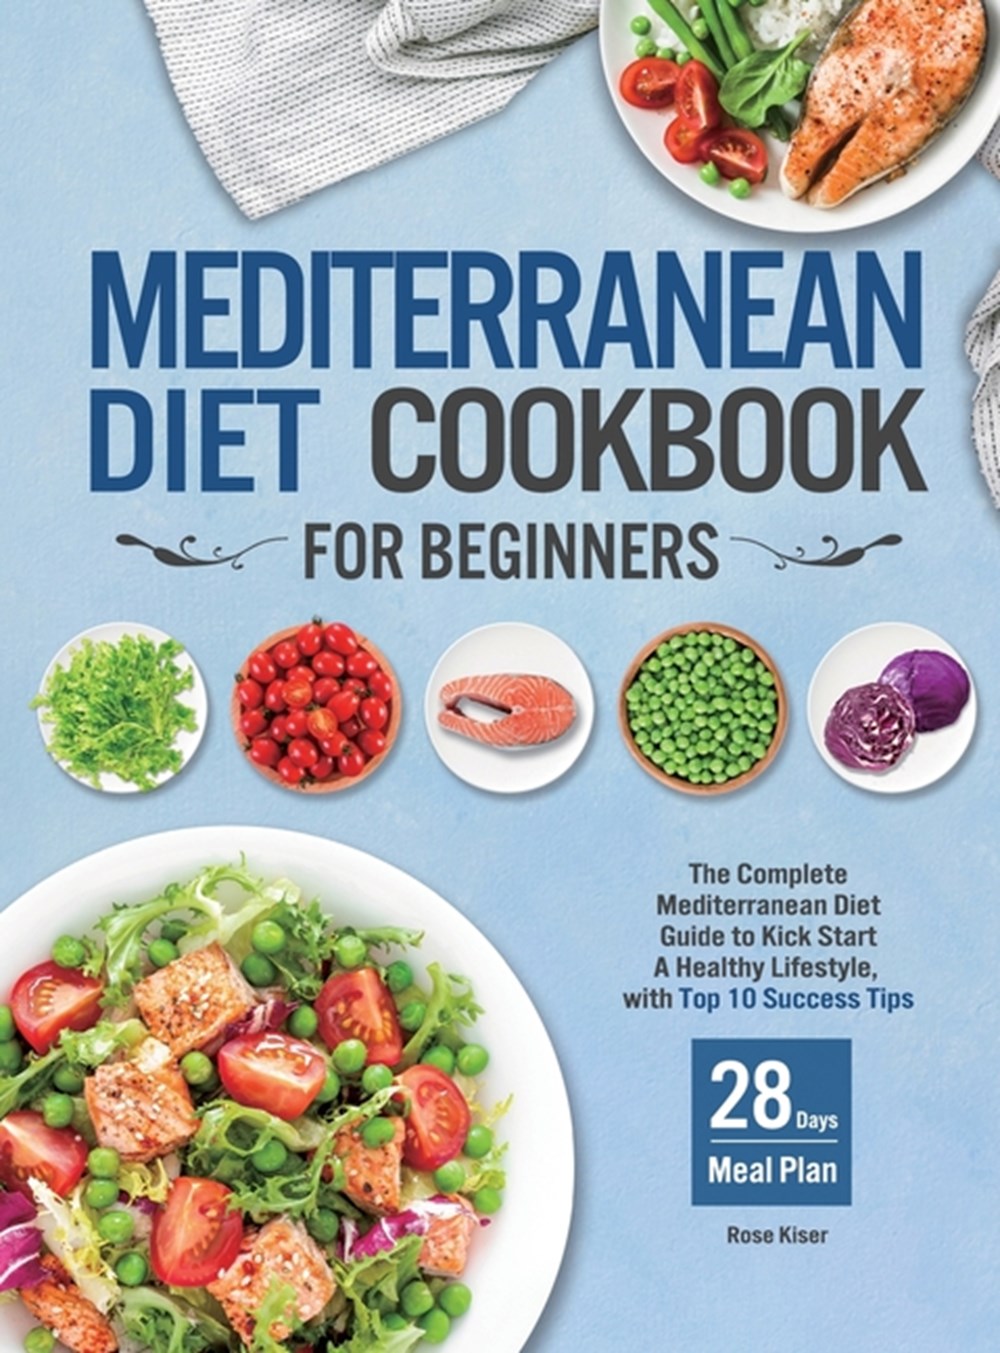 Mediterranean Diet Cookbook for Beginners in Hardcover by Rose Kiser